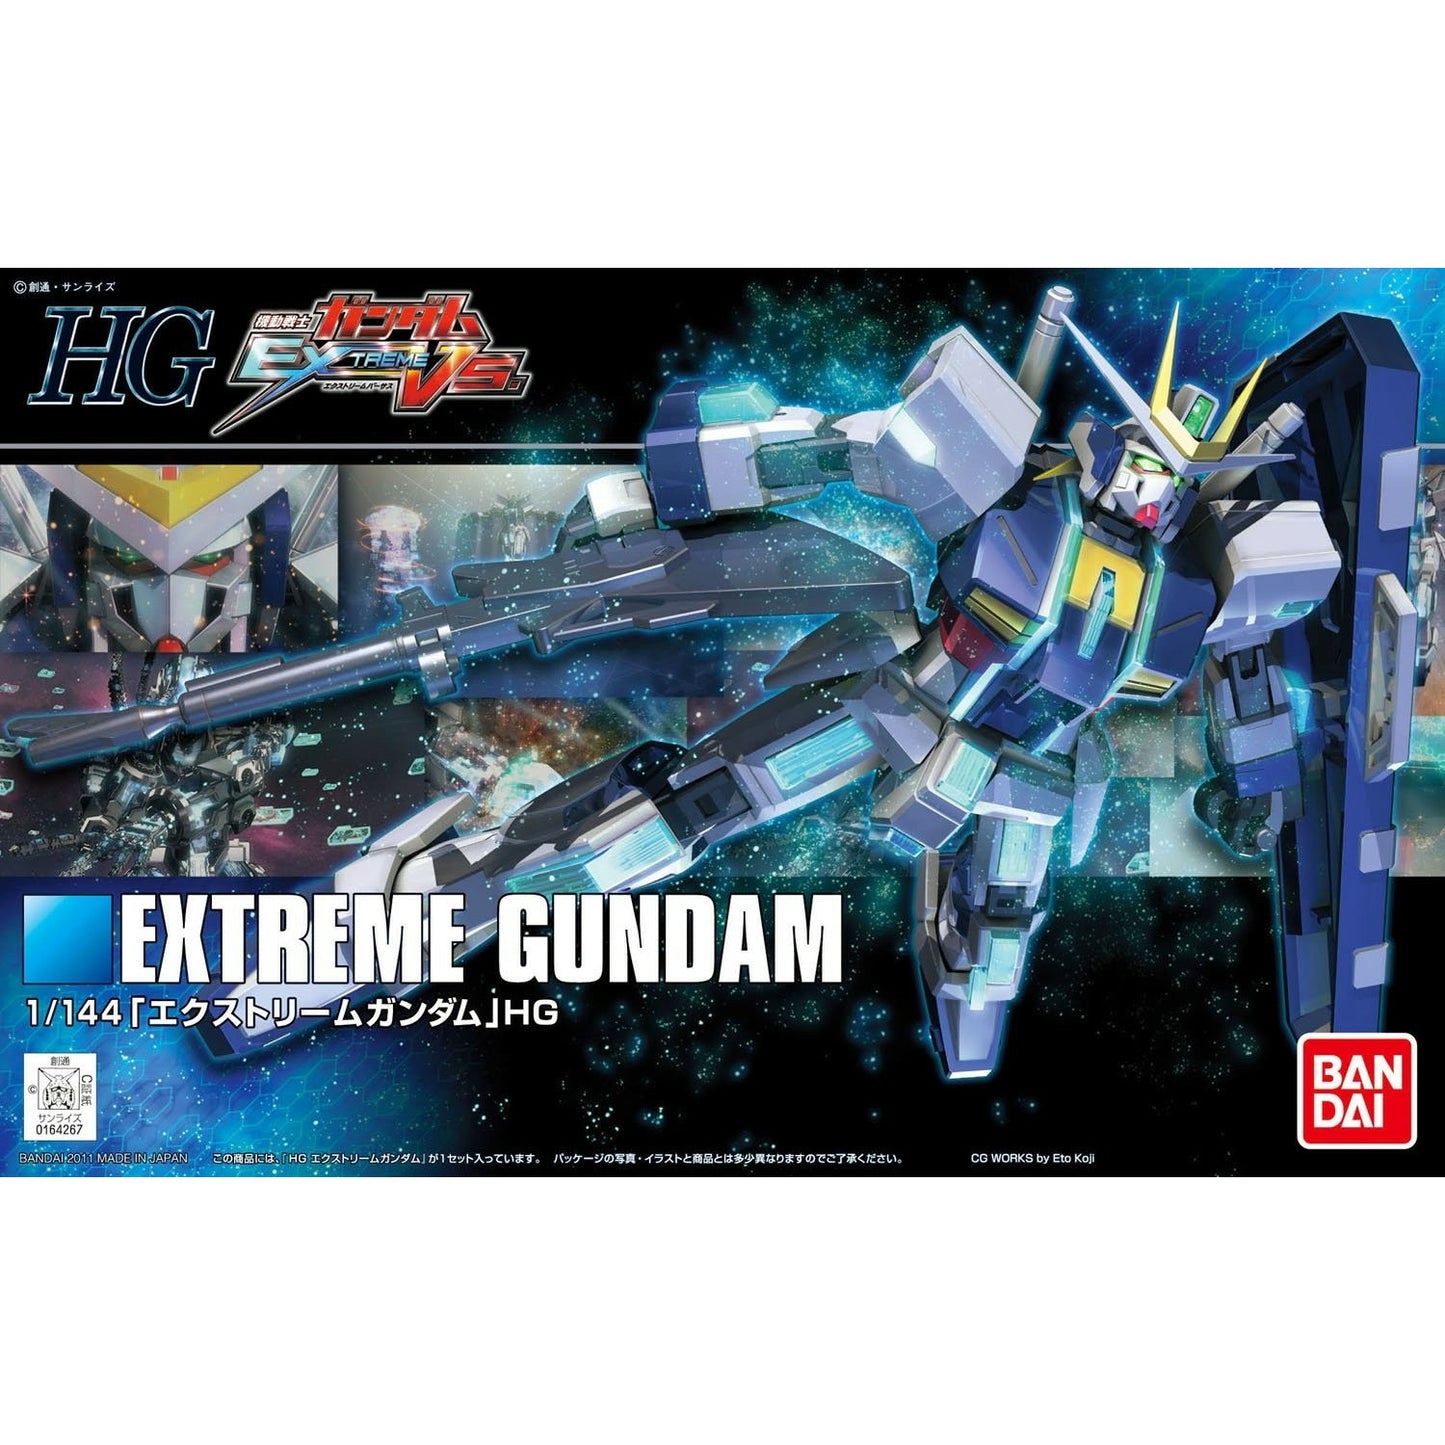 HGUC #121 Extreme Gundam